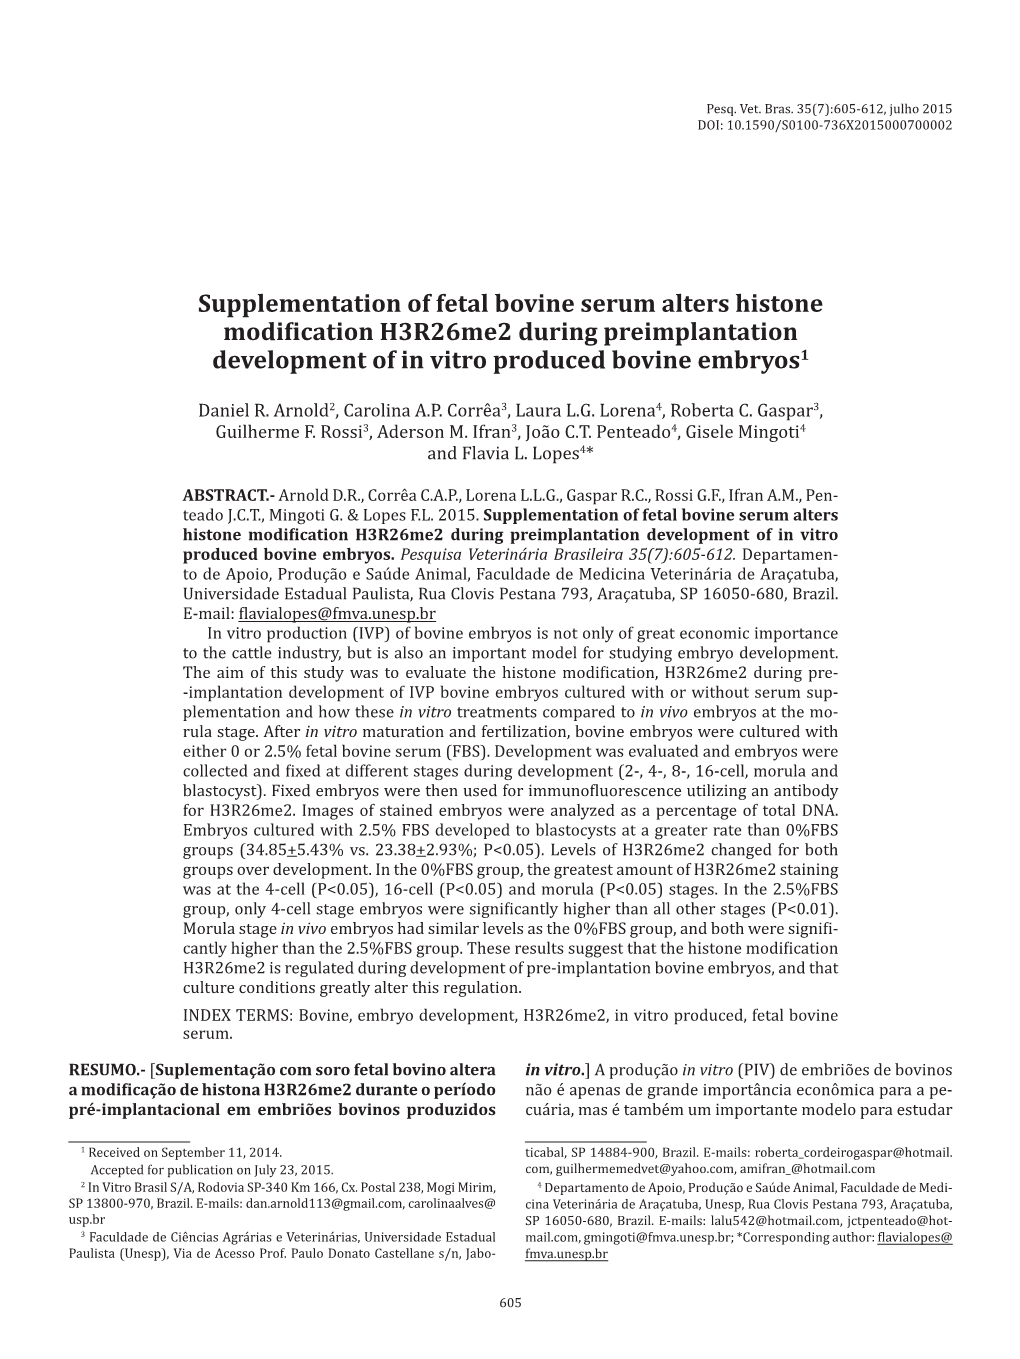 Supplementation of Fetal Bovine Serum Alters Histone Modification H3r26me2 During Preimplantation Development of in Vitro Produced Bovine Embryos1